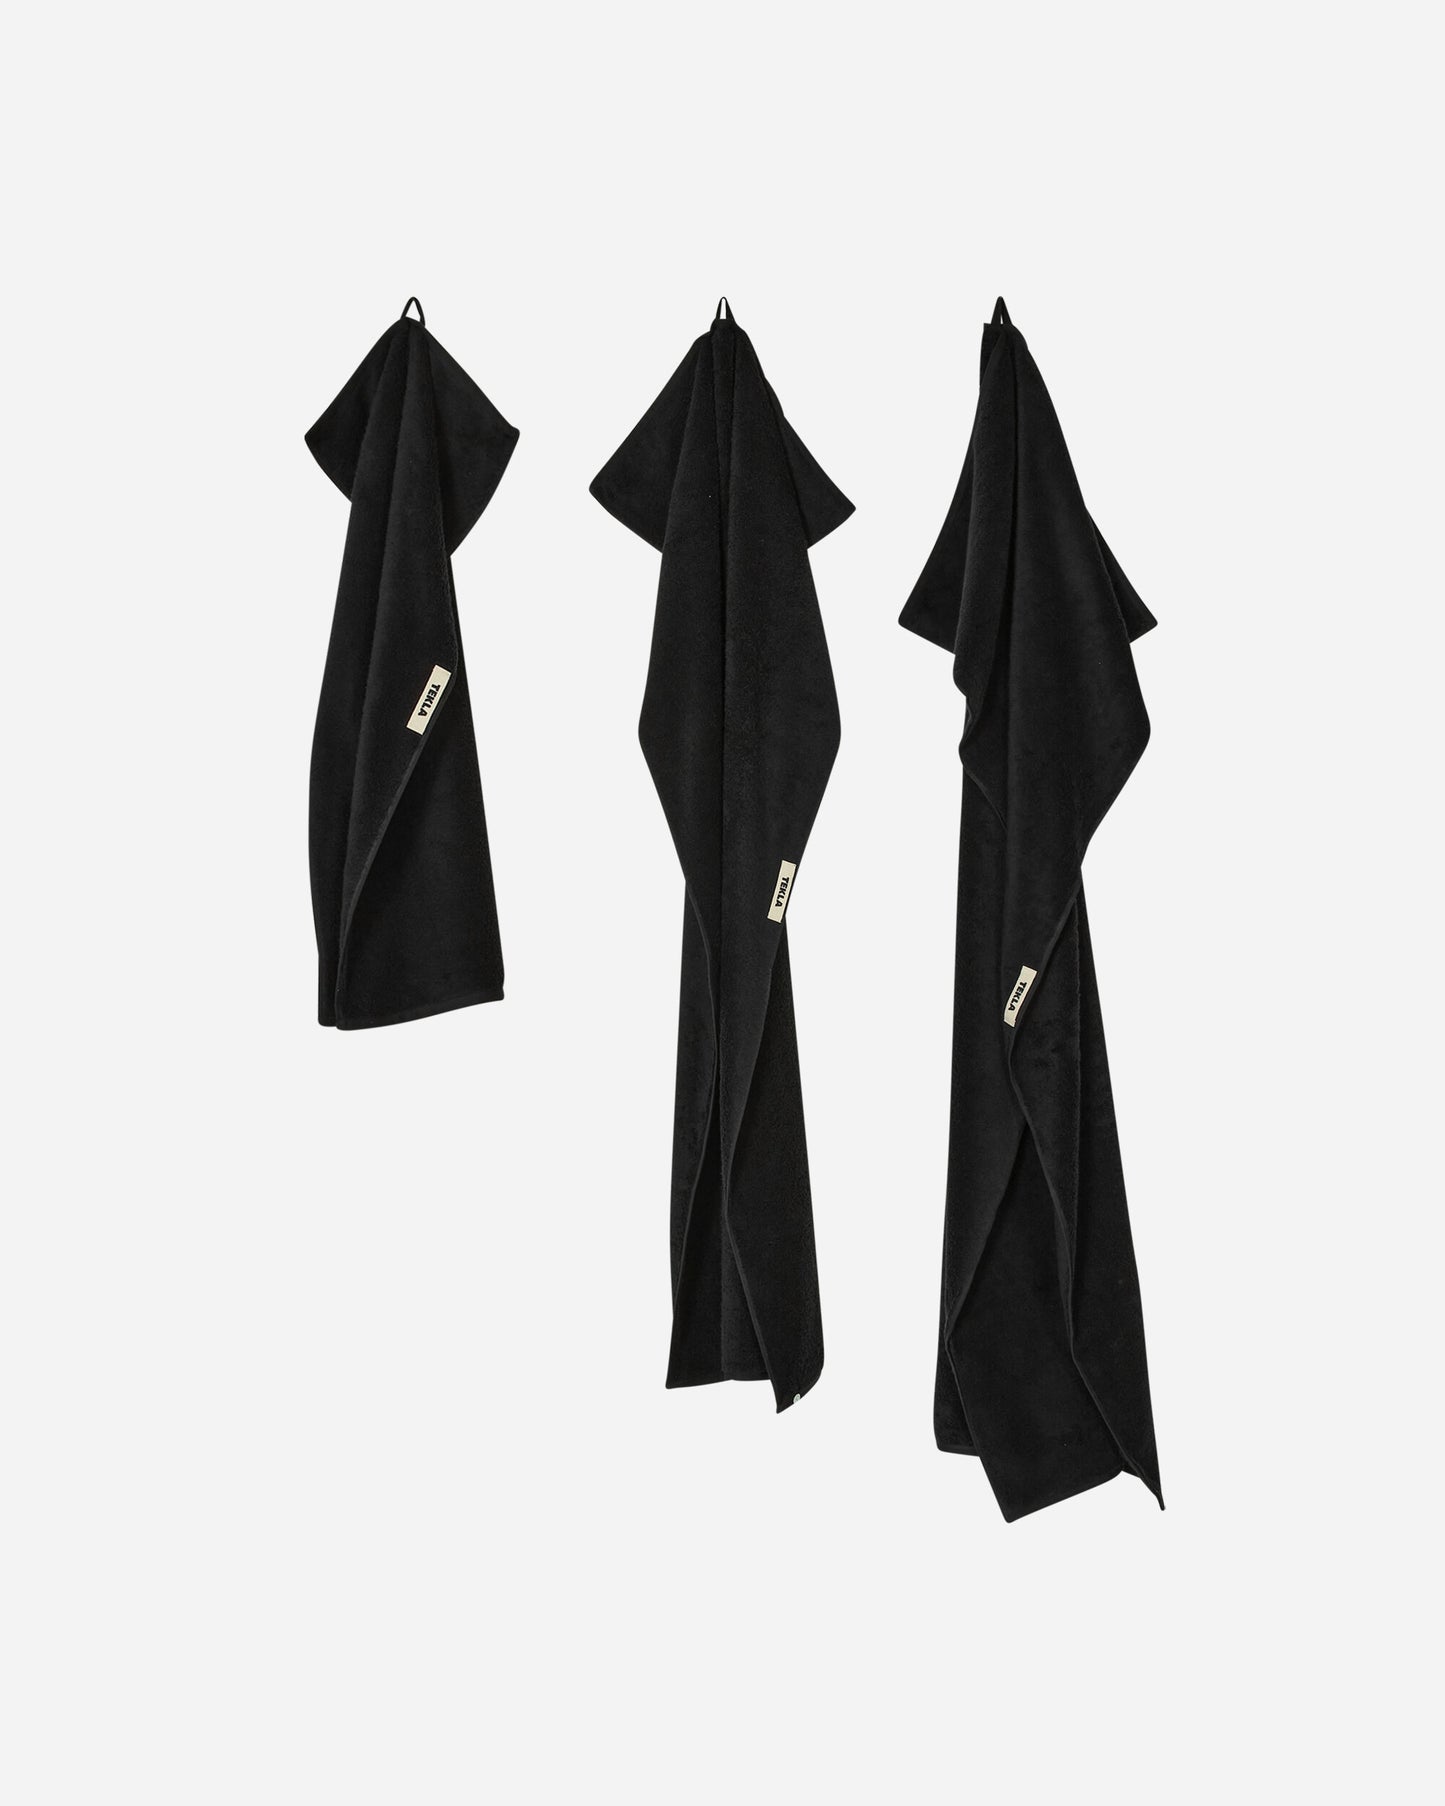 Tekla Bath Sheet Black Textile Bath Towels TT-BL-100x150 BLST